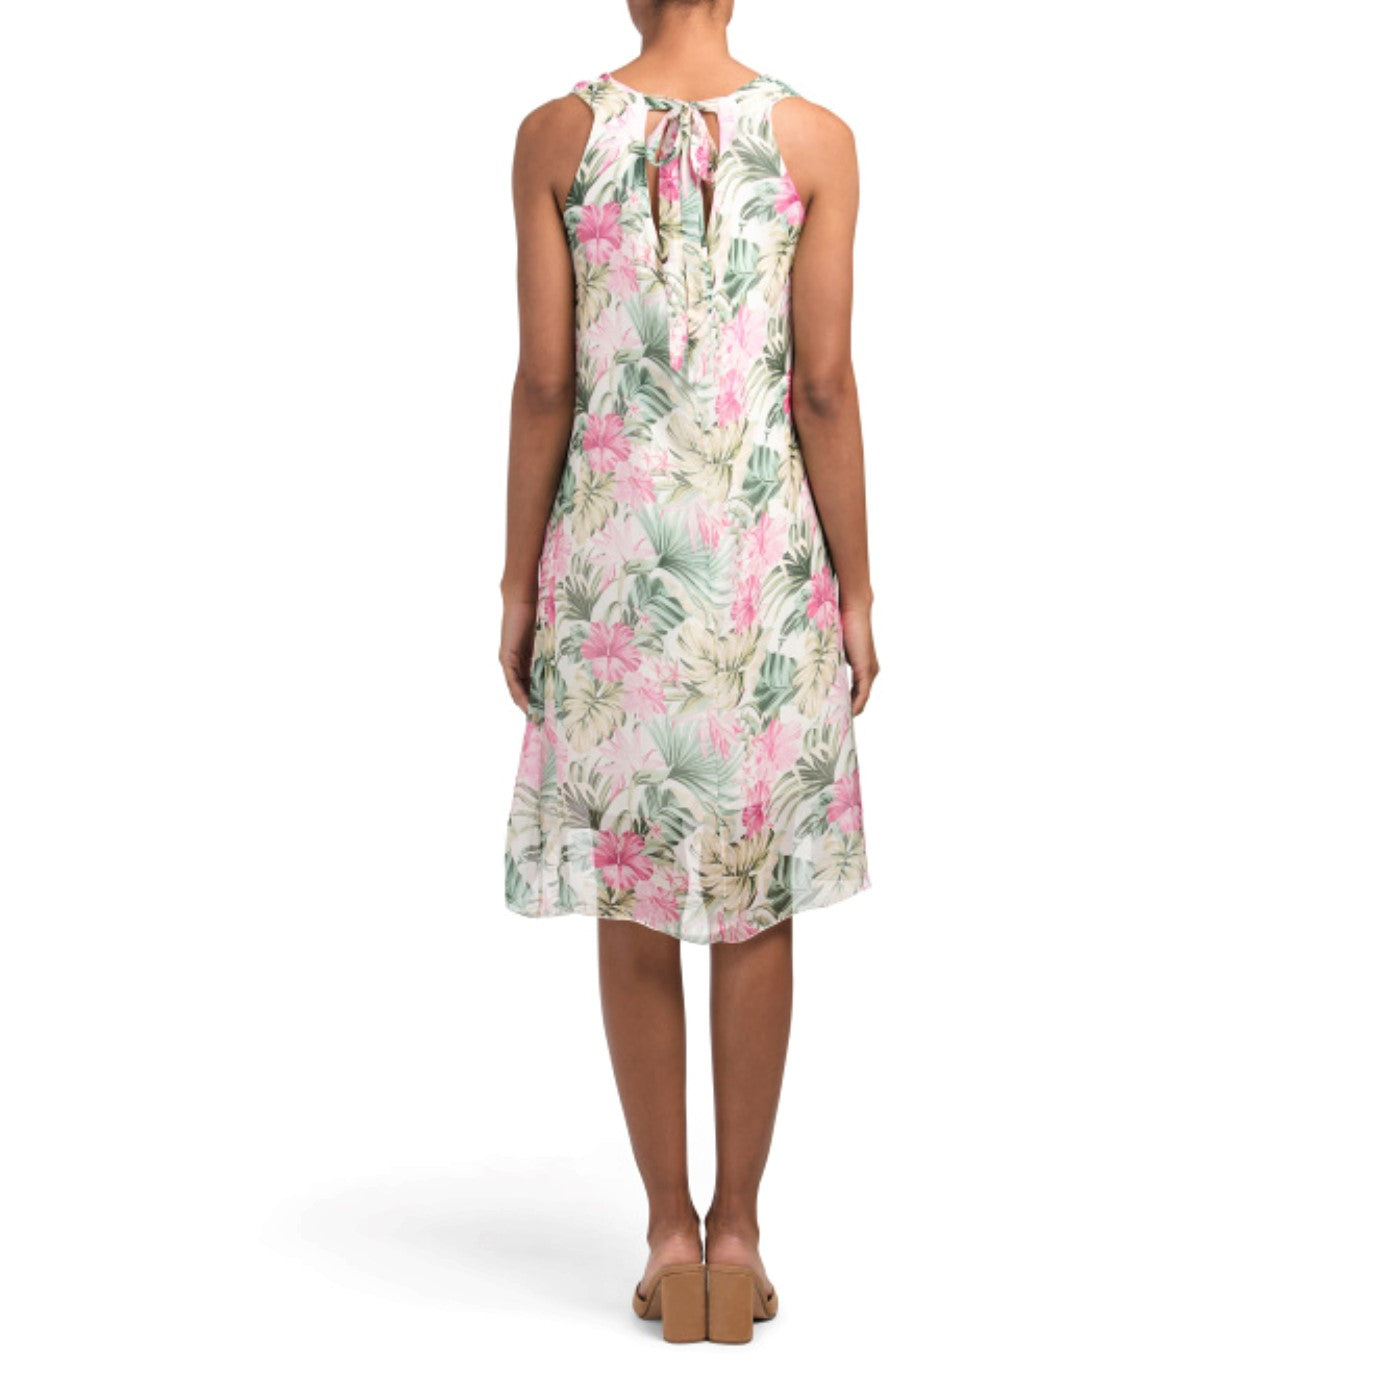 ROSEMARINE Made In Italy Hibiscus Print Silk Blend Dress